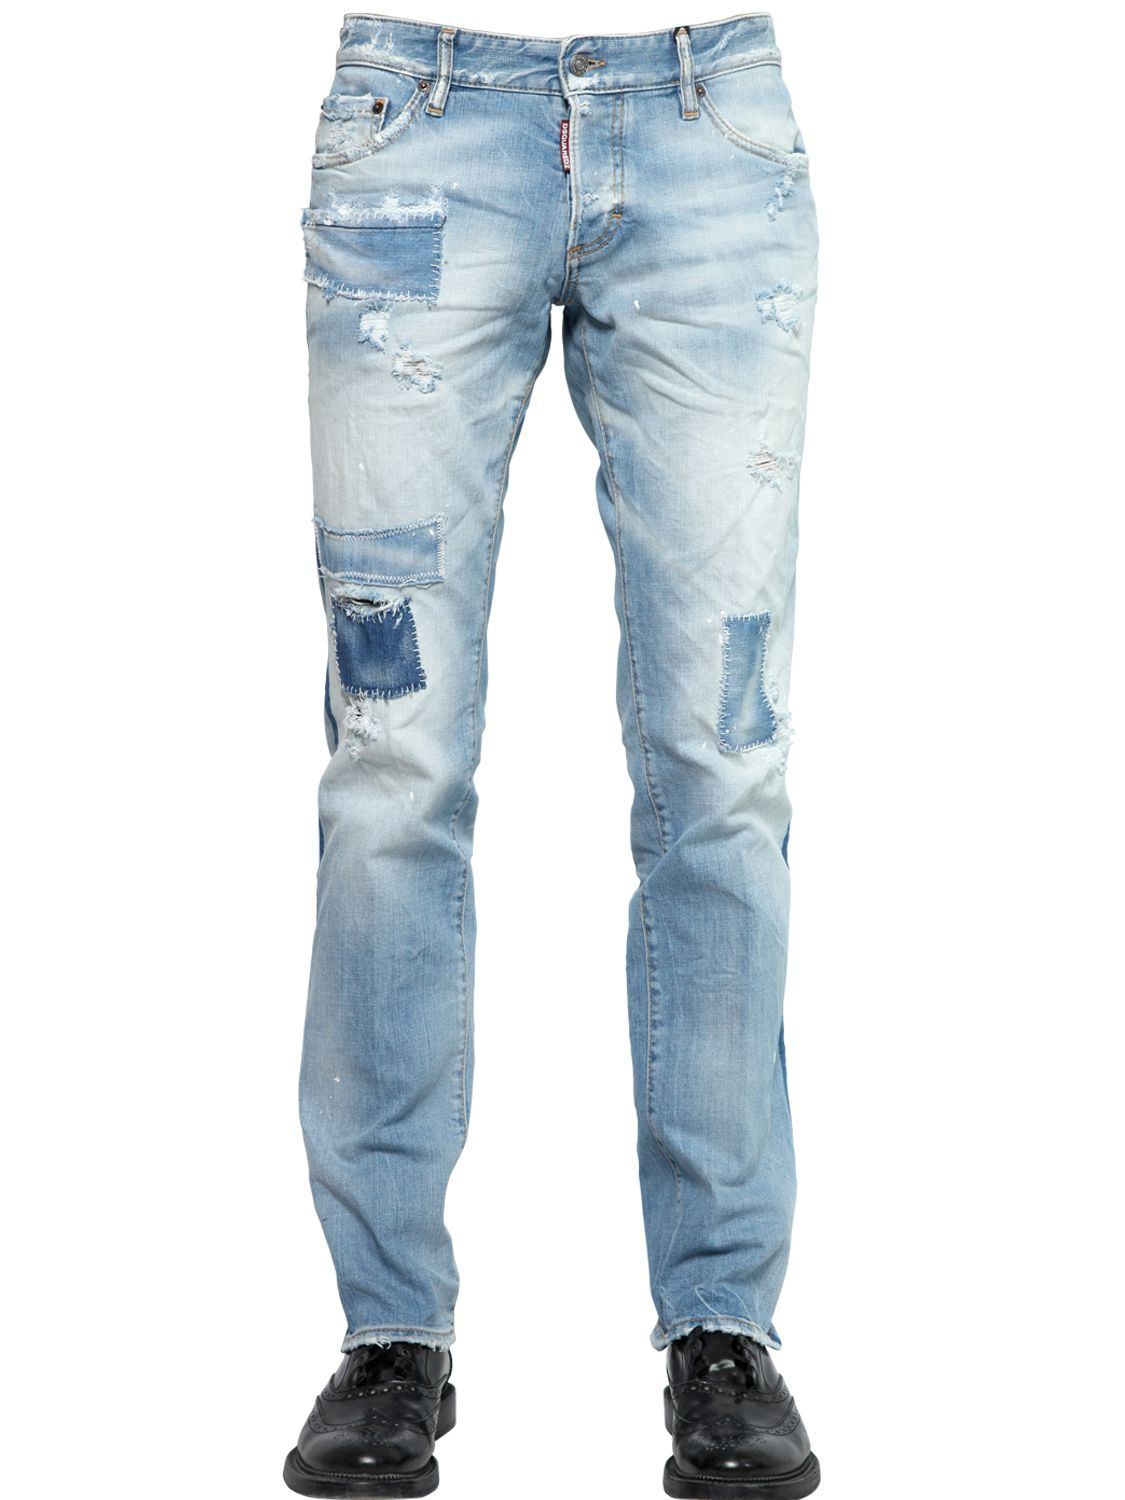 DSquared² 18Cm Slim Fit Patched Denim Jeans in Blue for Men - Lyst